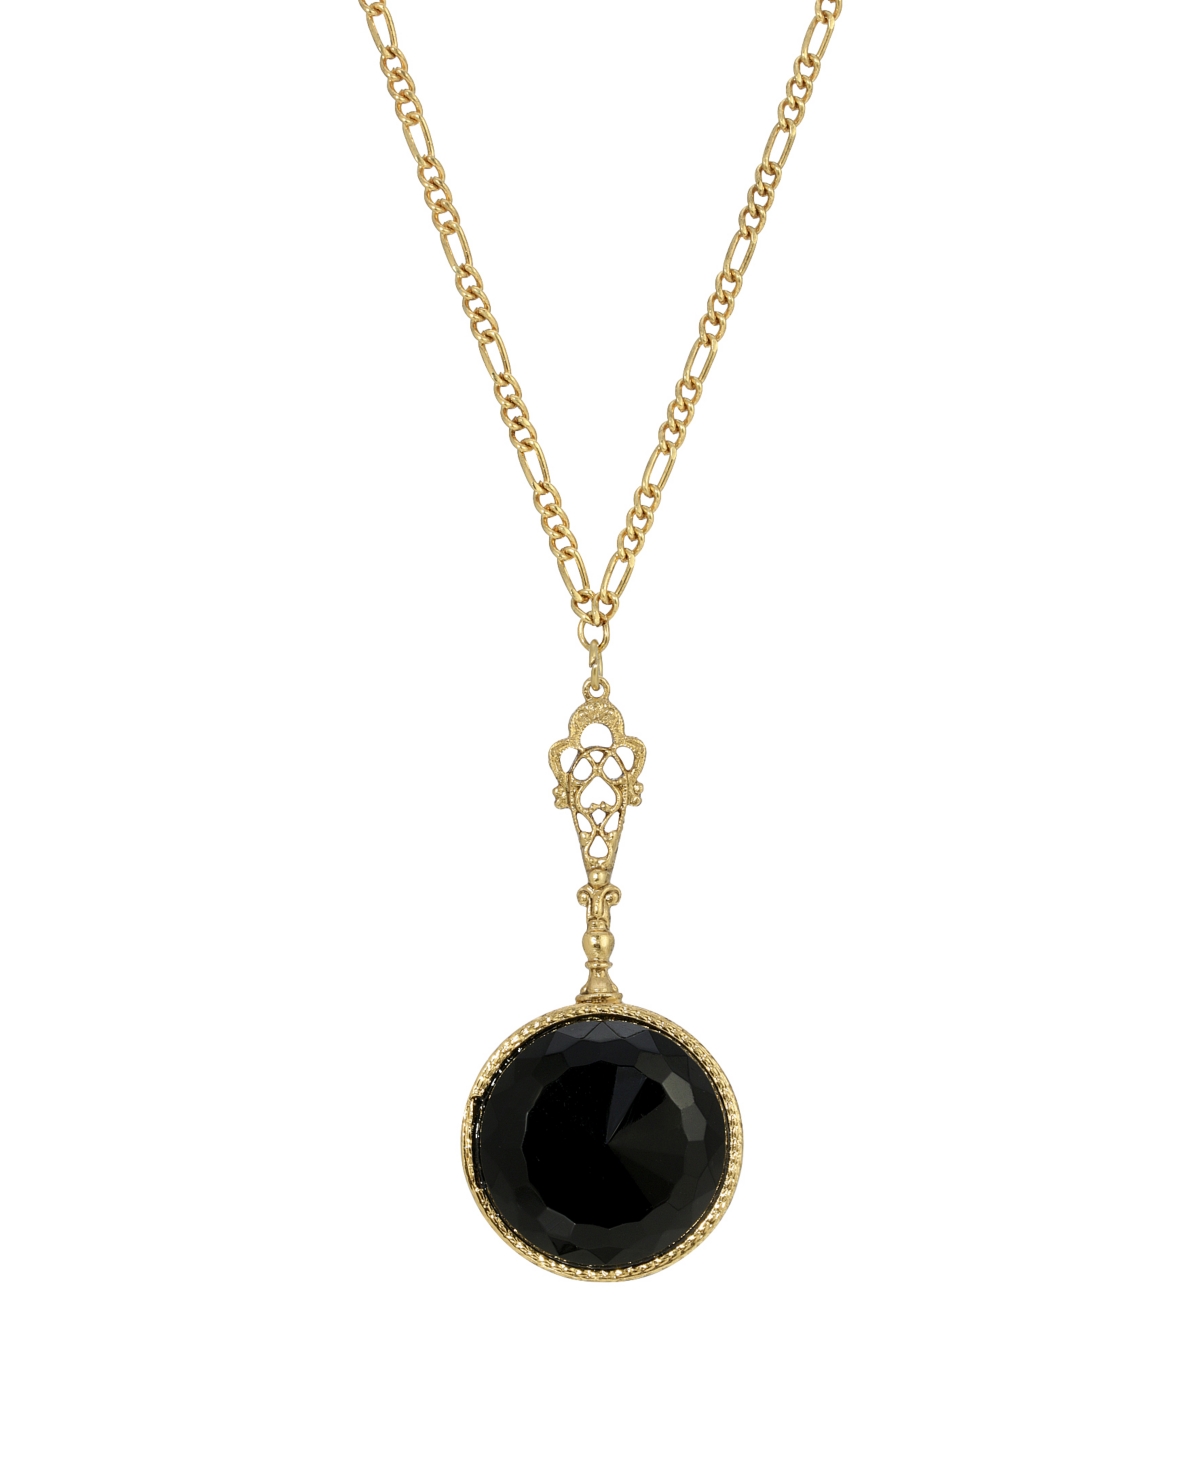 Acrylic Black Round Pendant Necklace - Black